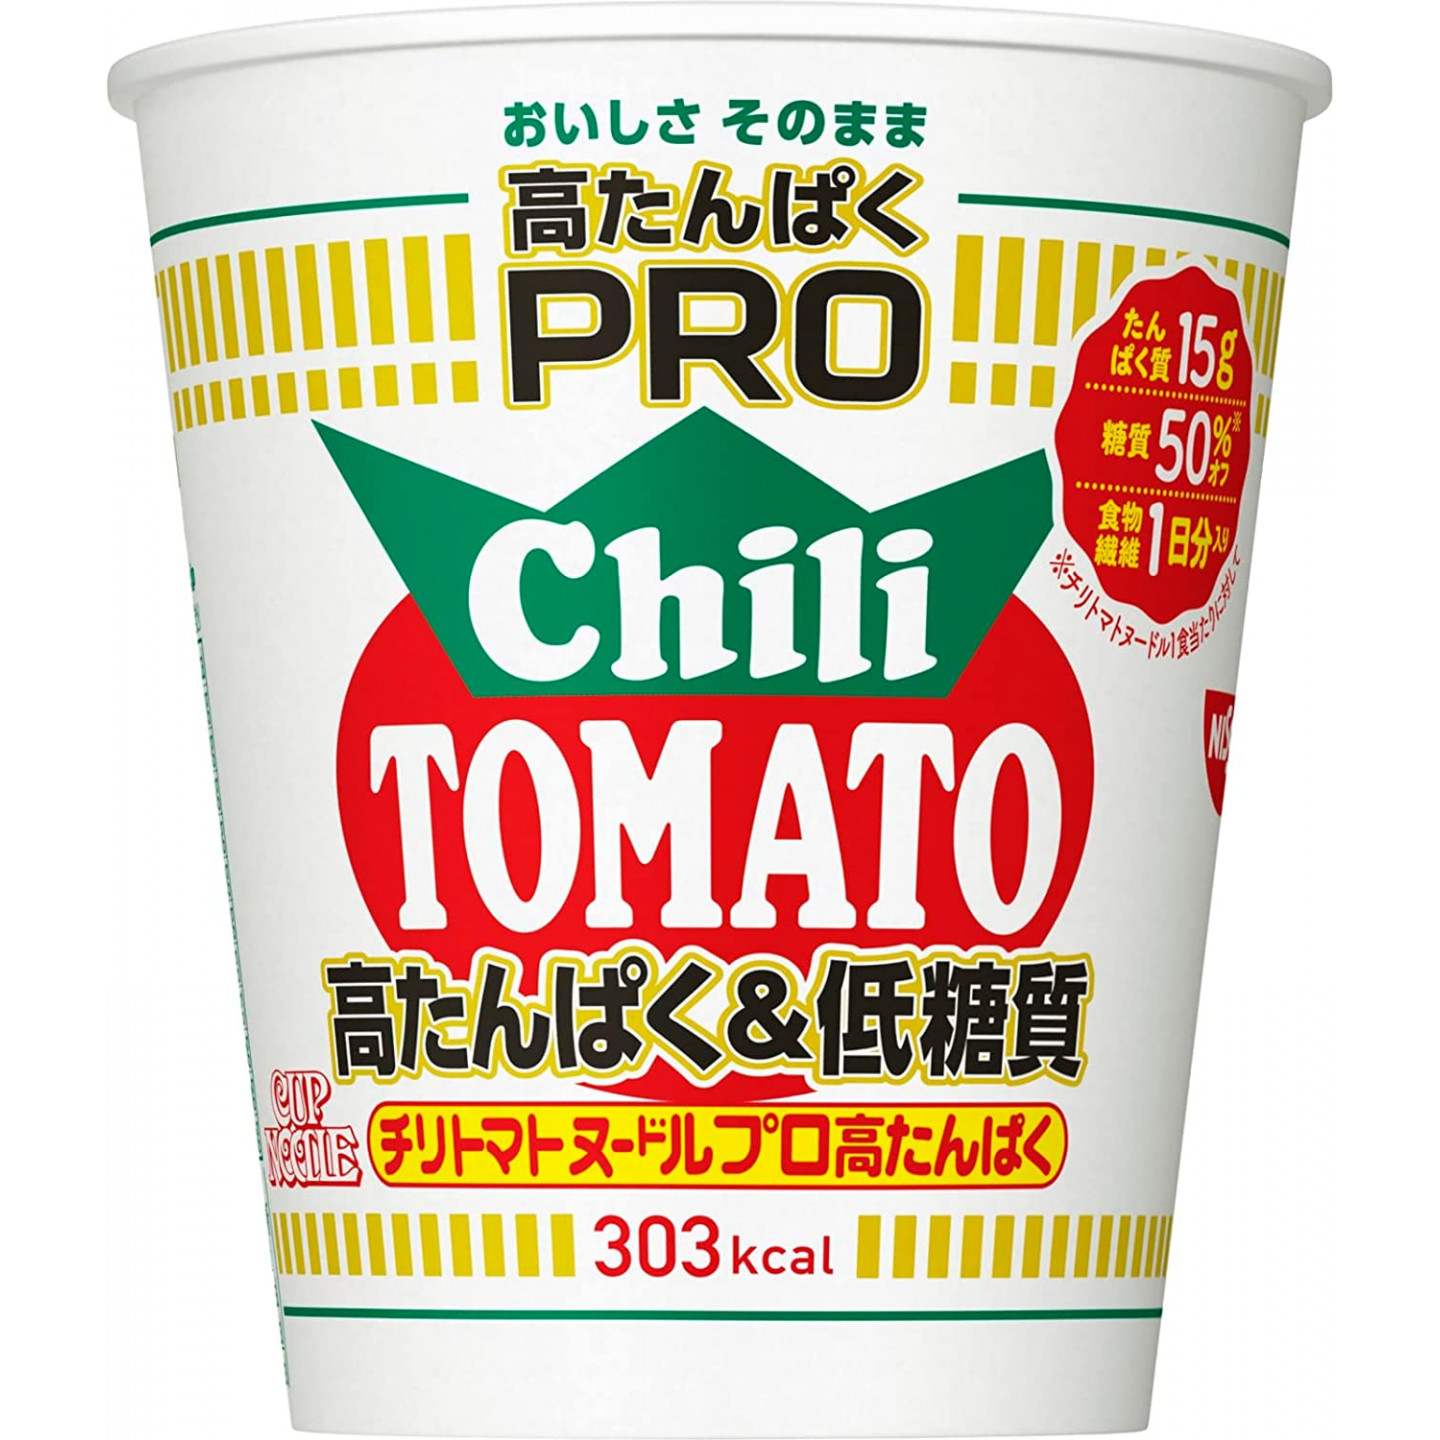 Cup Noodles Pro Chili Tomato